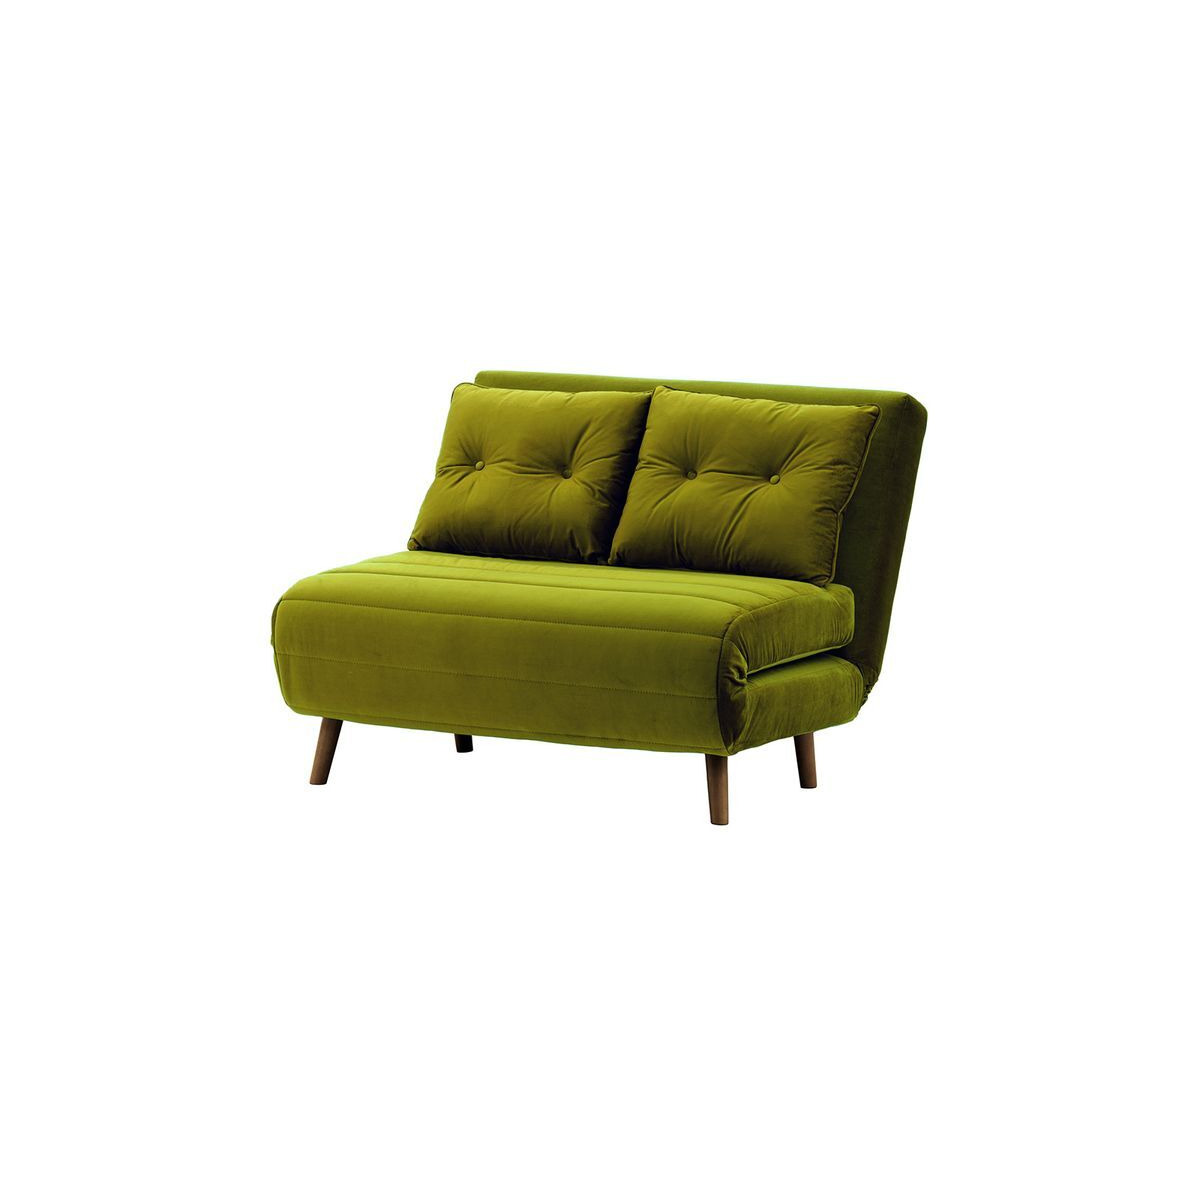 Flic Small Sofa Bed - width 103 cm, olive green, Leg colour: dark oak - image 1